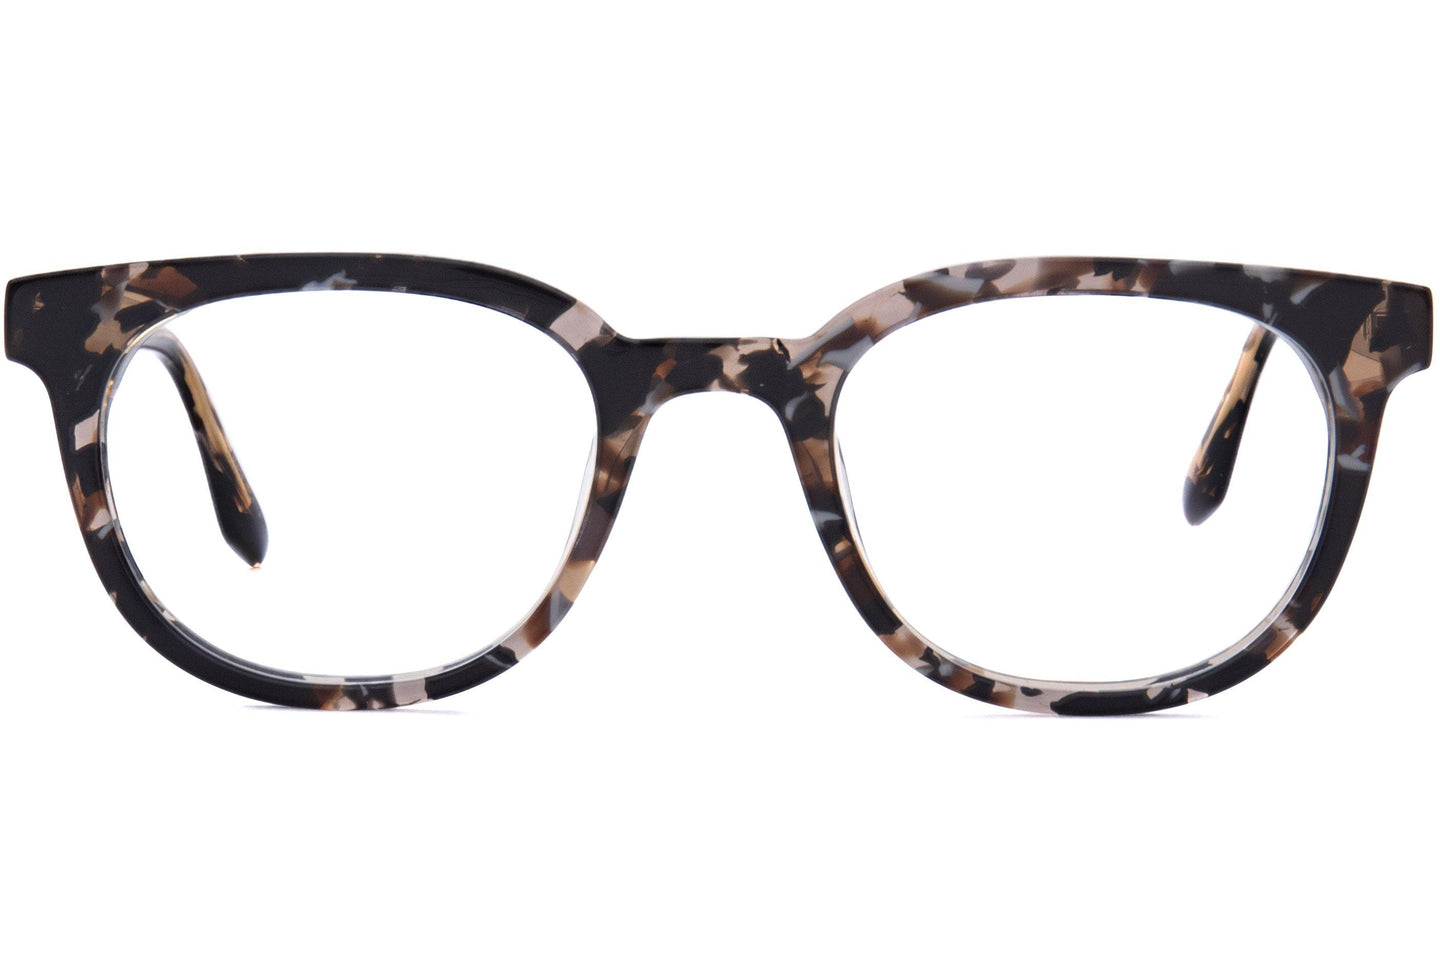 Emma | Baxter Phillips | Fashionable Prescription Eyewear